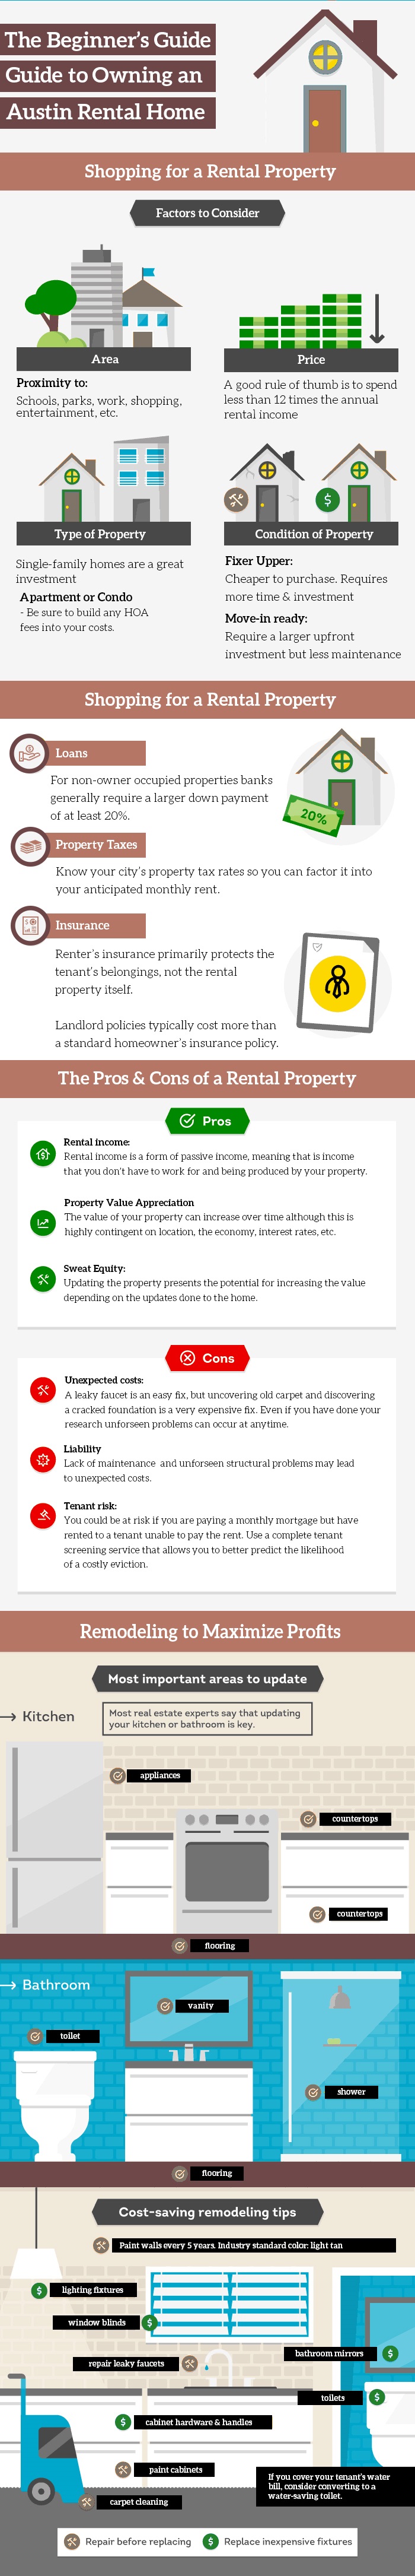 austin rental homes infographic